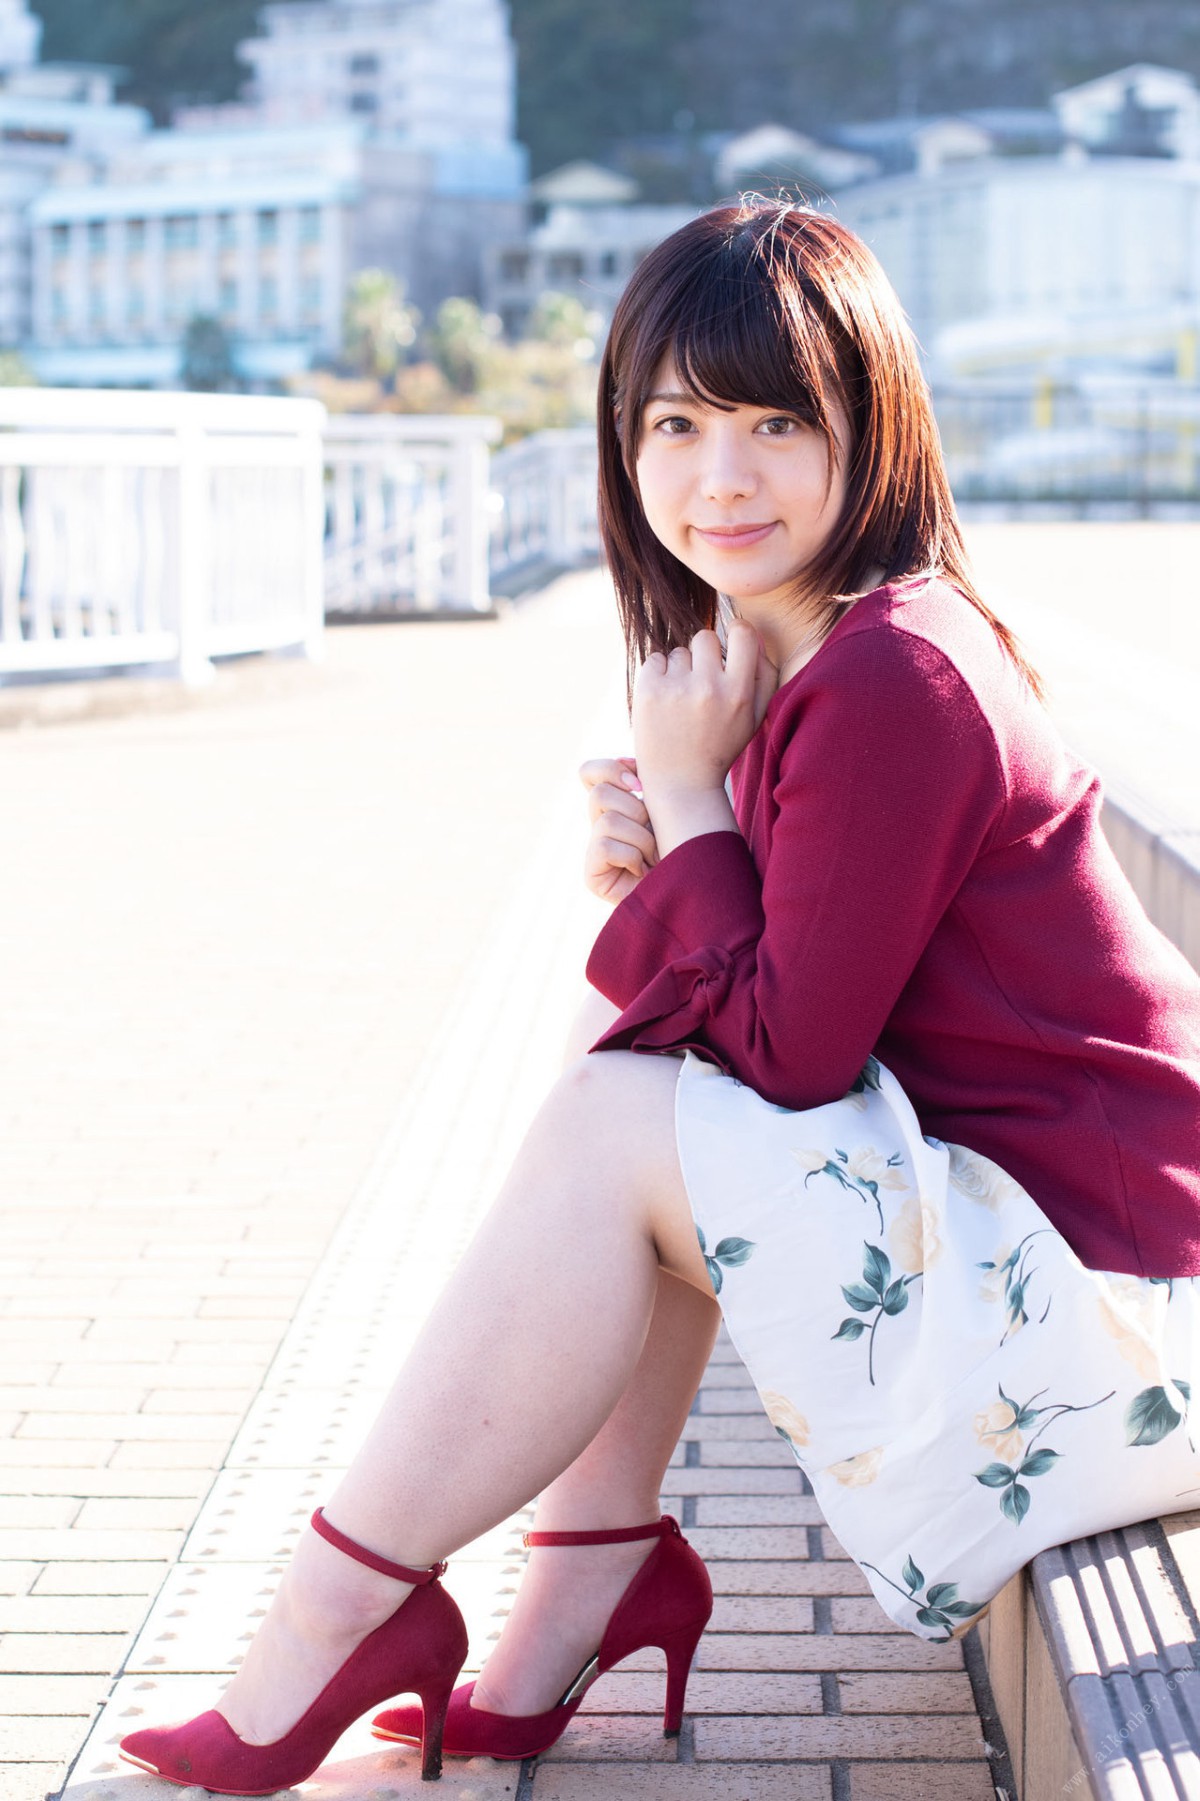 Photobook 2019 07 19 Asuna Kawai Maria Aine Nozomi Arimura 2 Days 1 Night Hot Spring Date 0052 5963622692.jpg